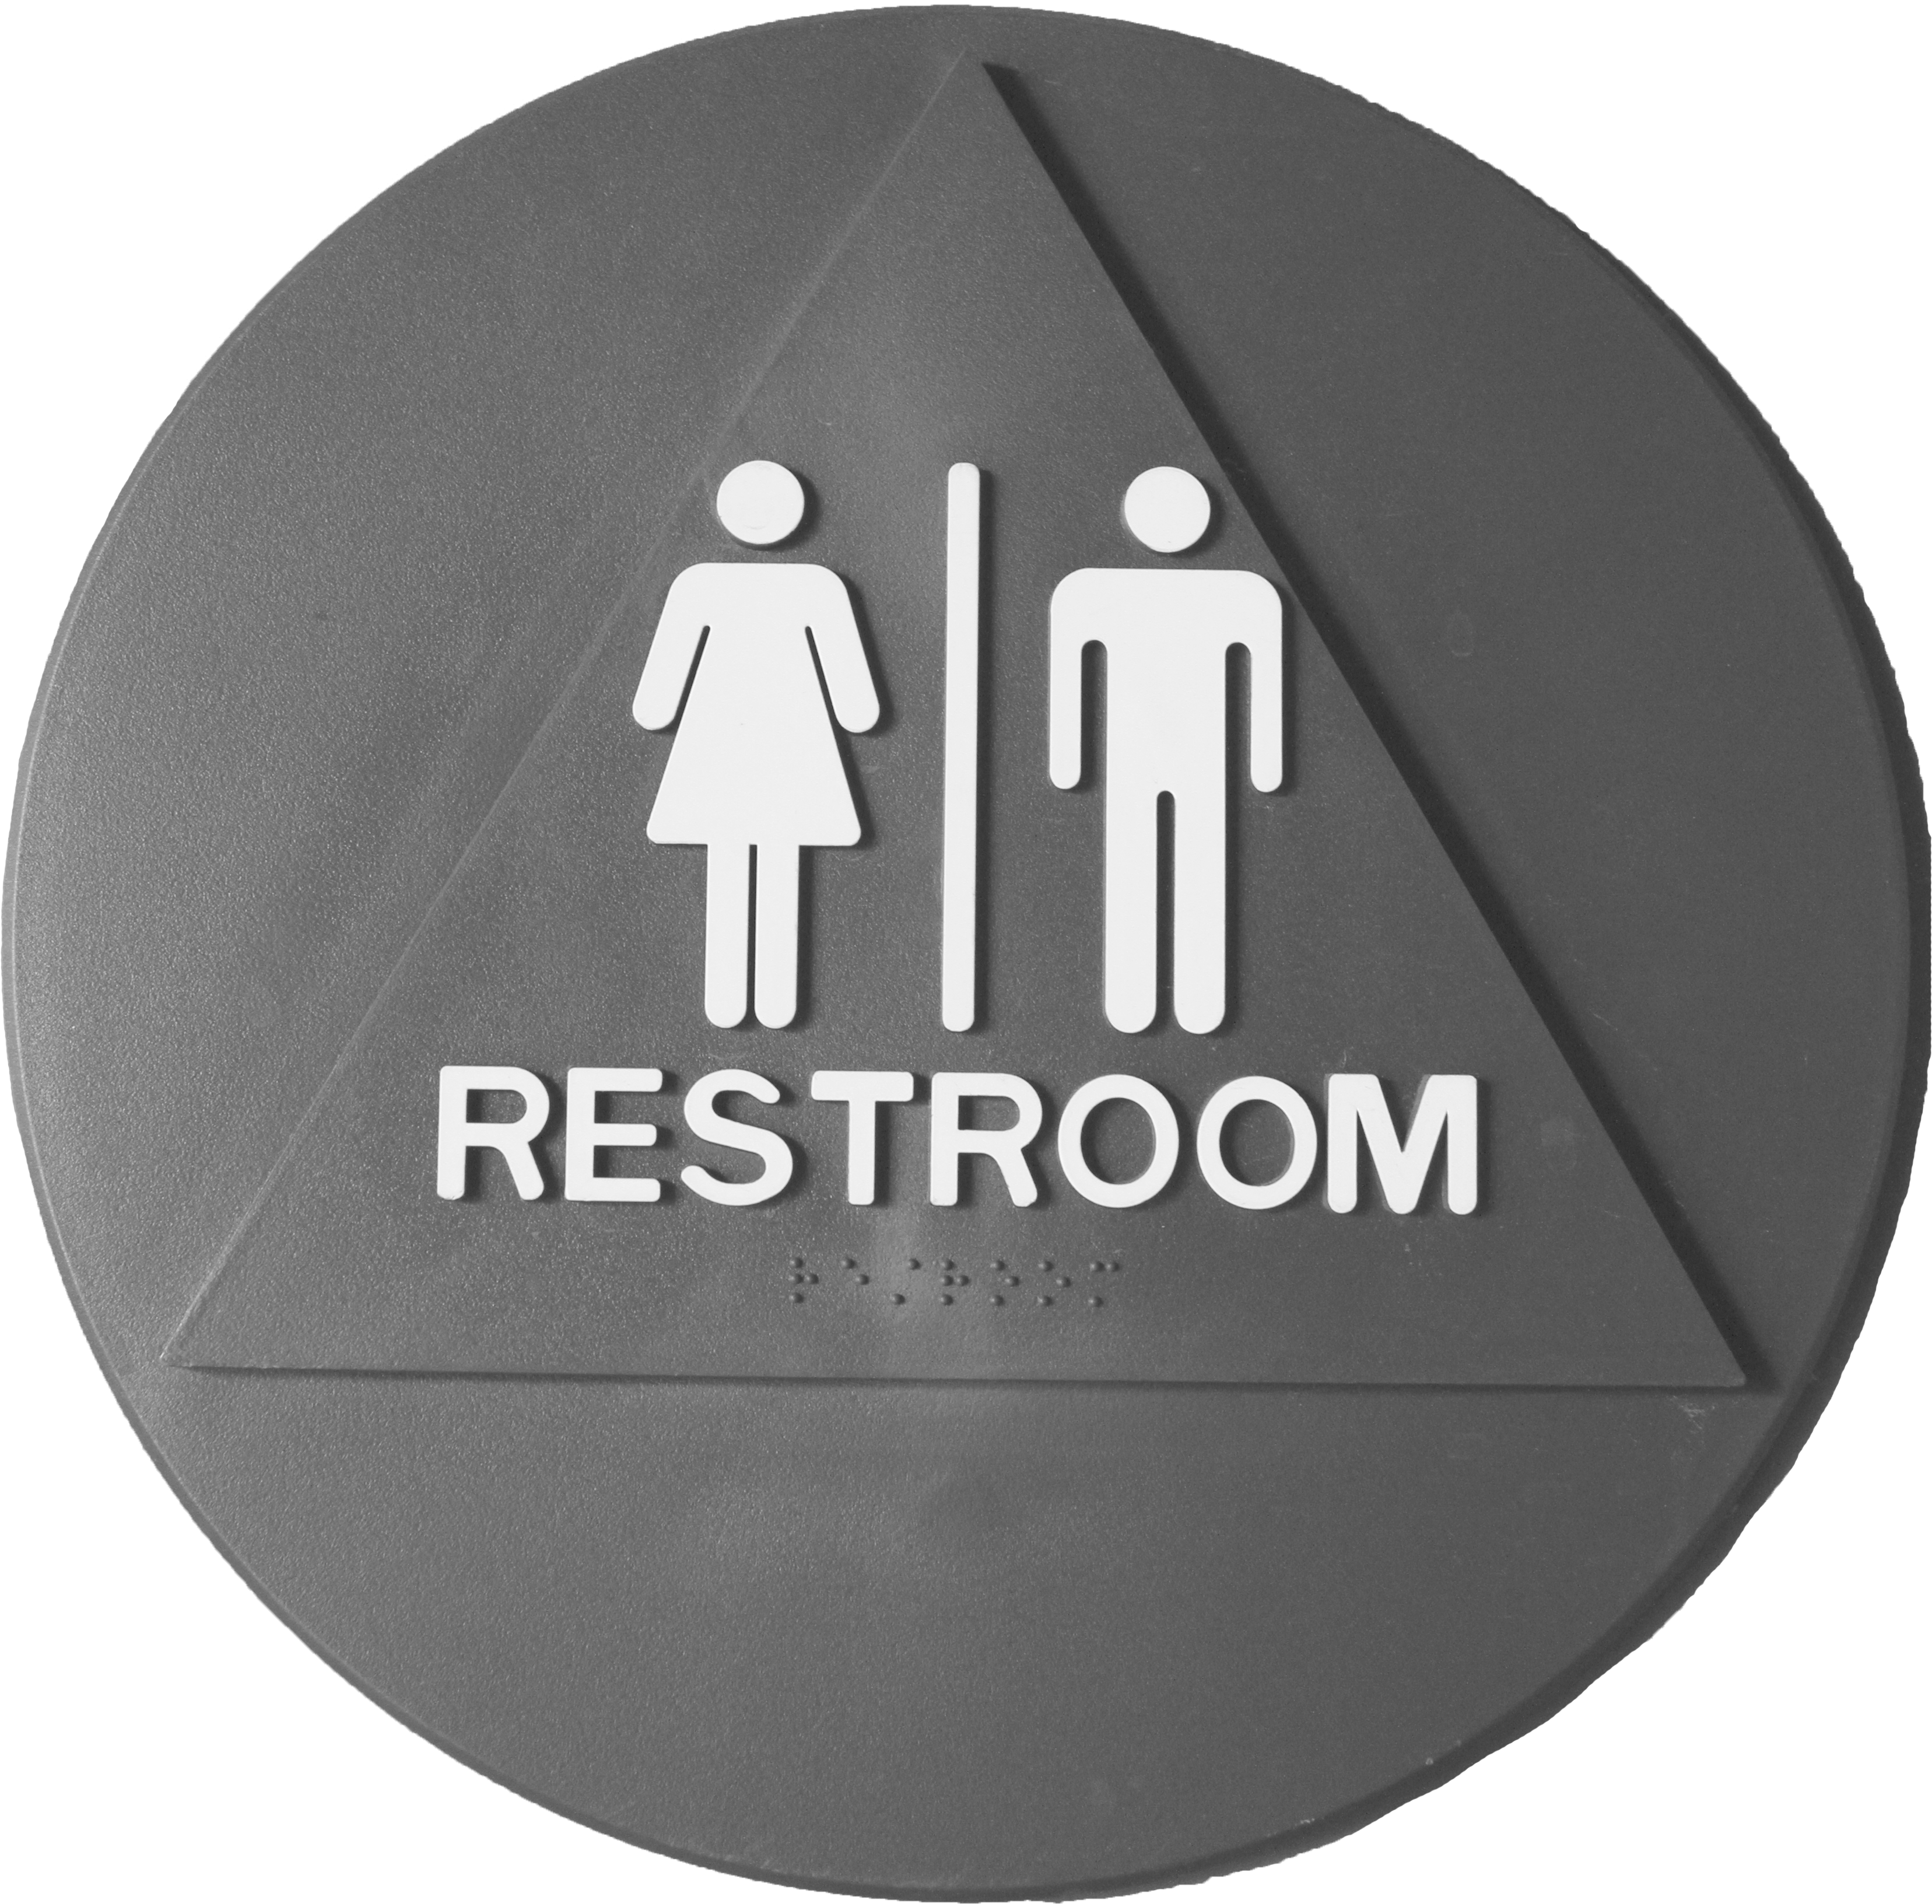 Unisex Restrooms Installed At Gunn - Restroom Comfort Room Signage (5184x3456)